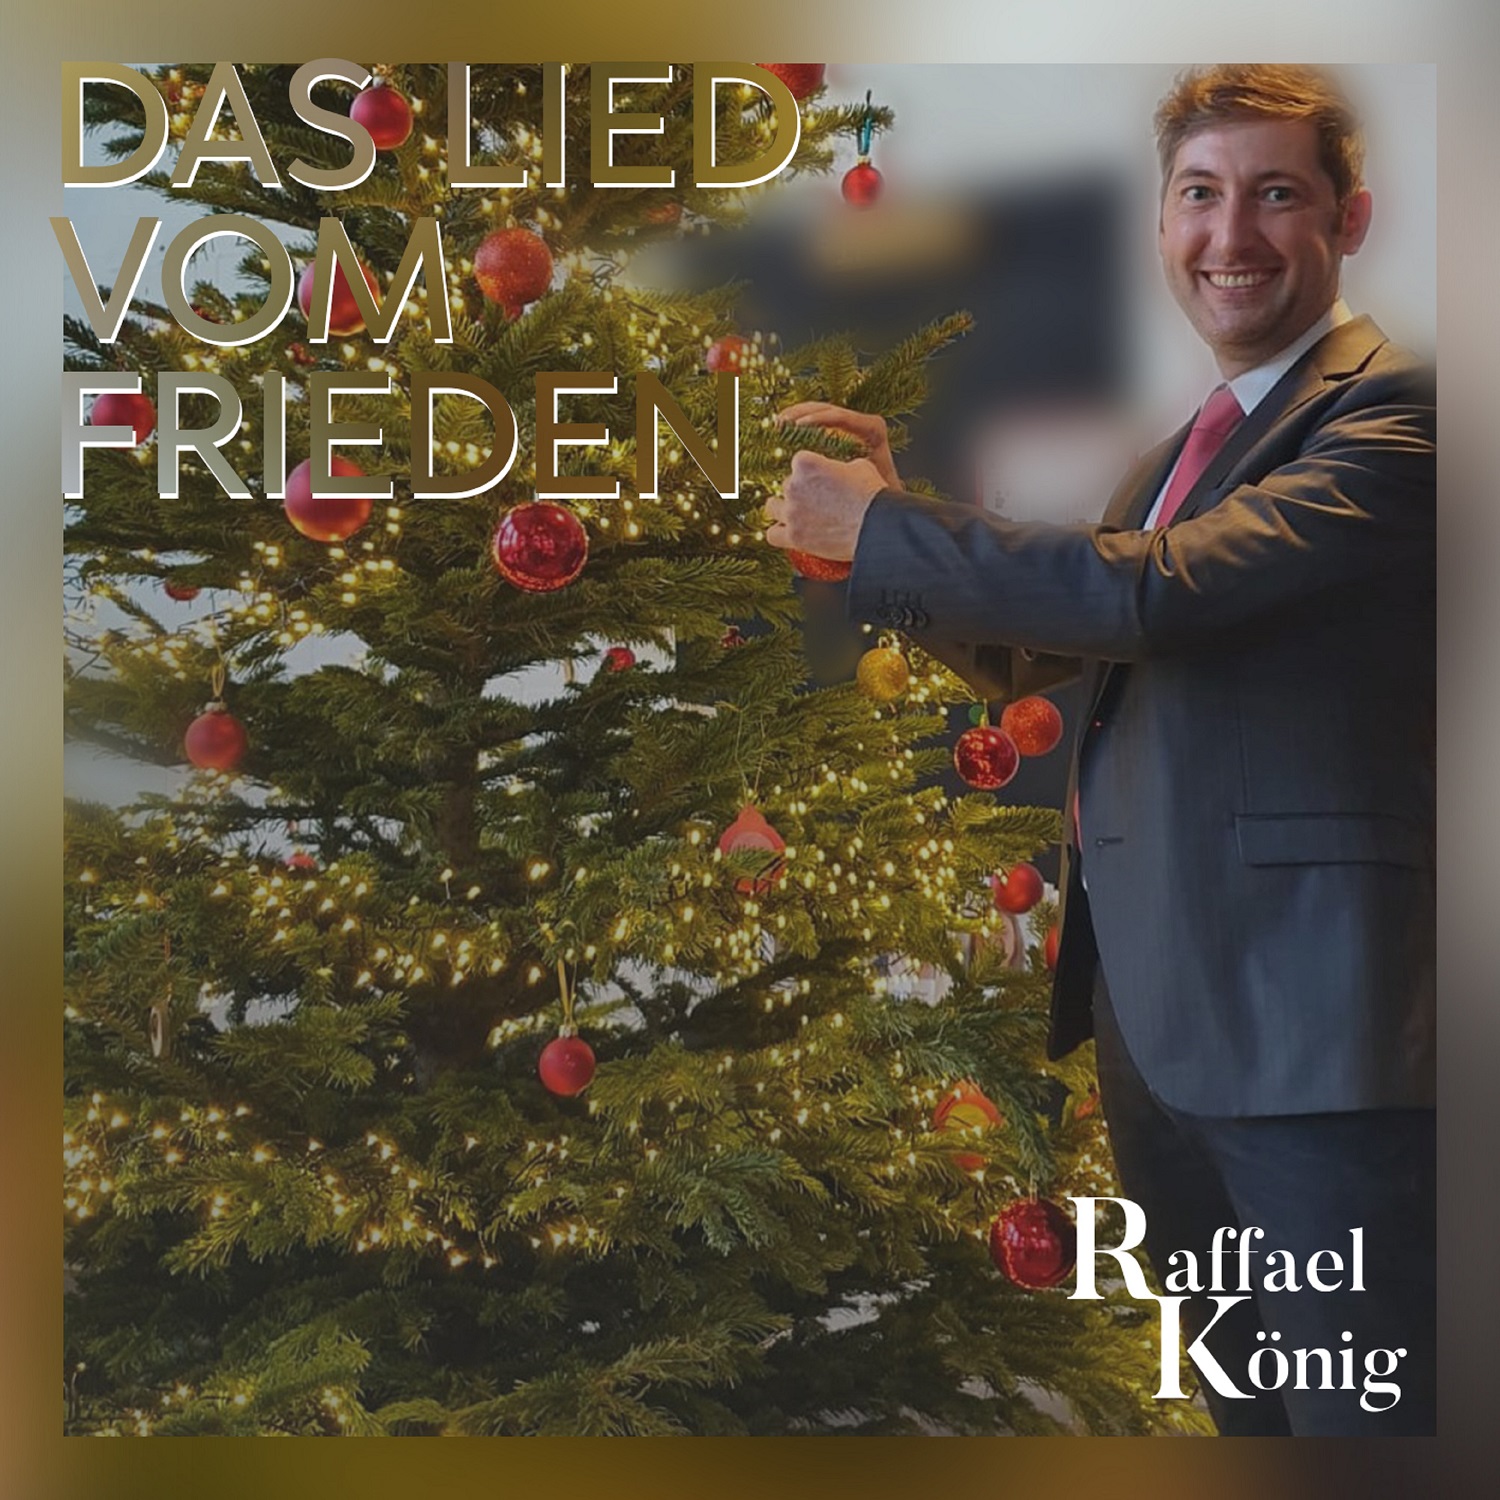 Raffael Knig - Das Lied vom Frieden - CD Cover.jpg